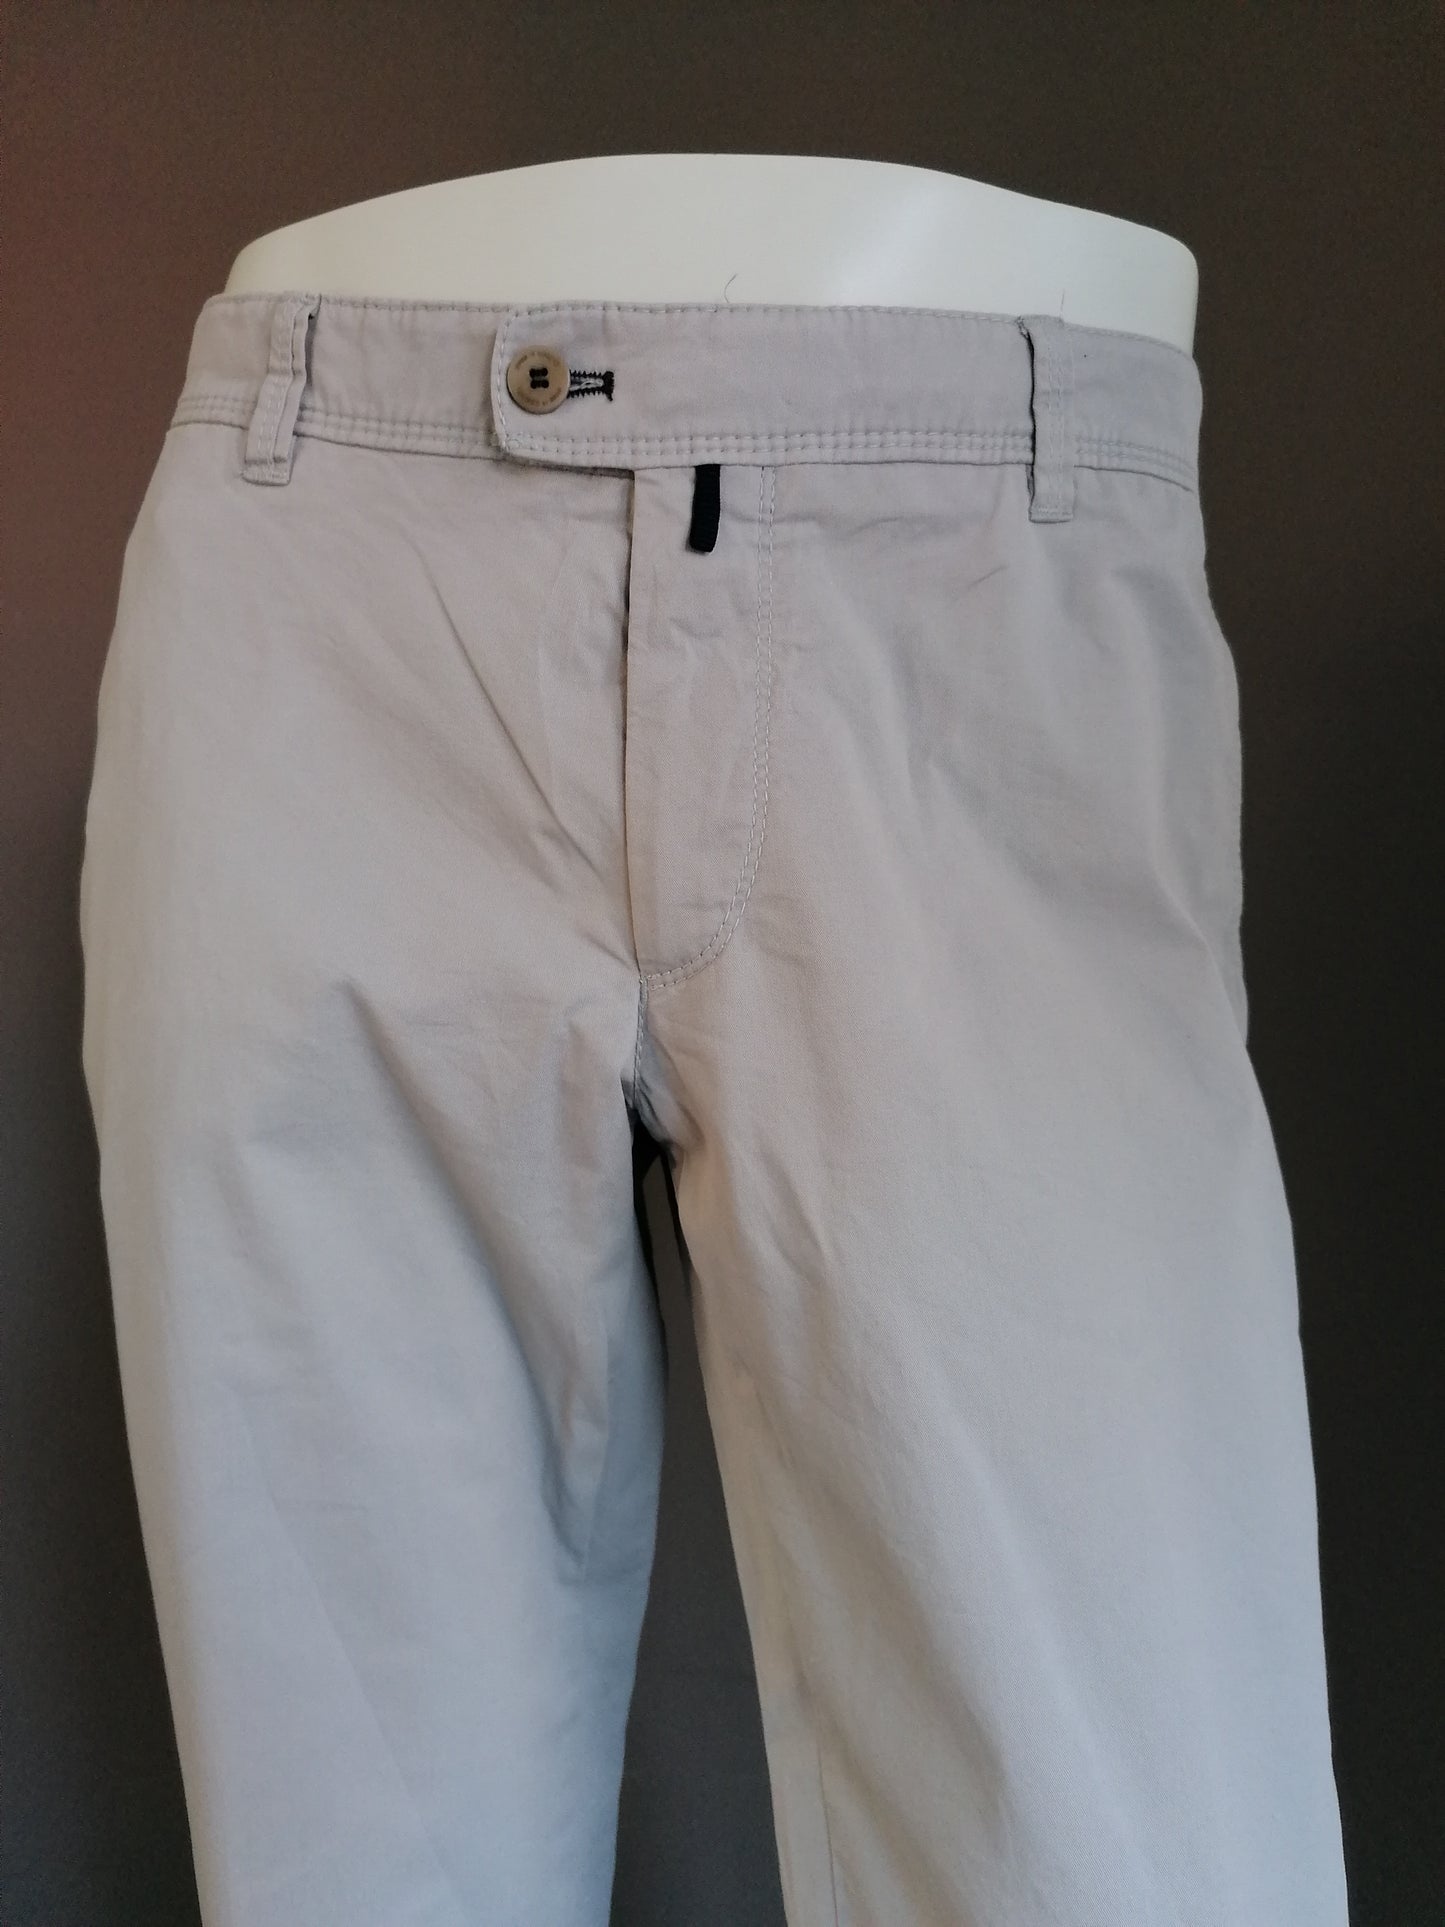 Pantaloni / Pantaloni / Pantaloni Brax. Colorato beige. Dimensioni 27. "Pima Gabardine" nuovo!